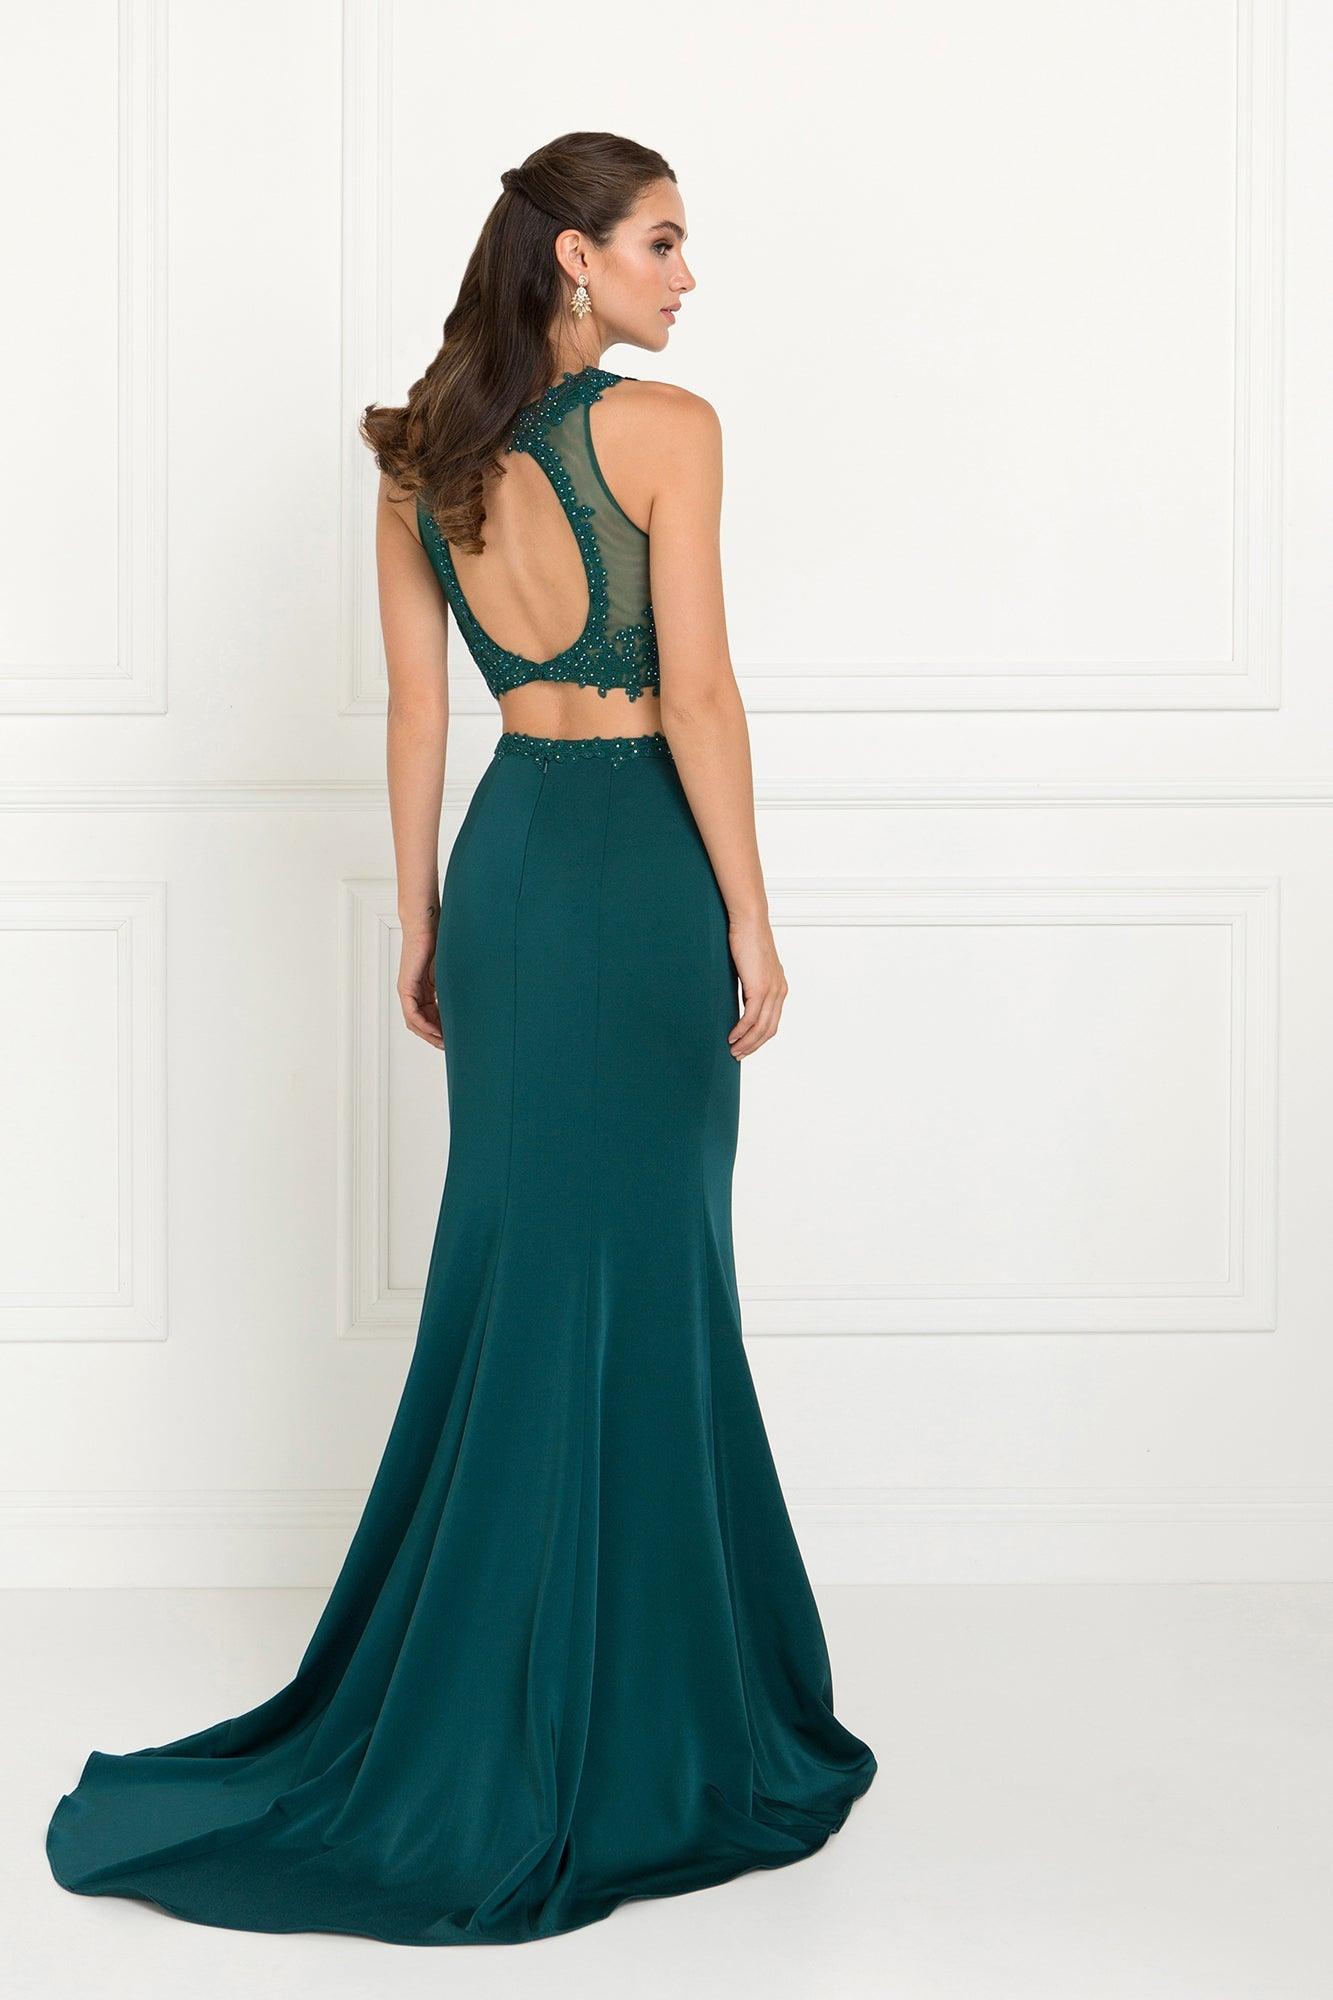 Prom Long Formal Dress Two Piece Halter Evening Gown - The Dress Outlet Elizabeth K